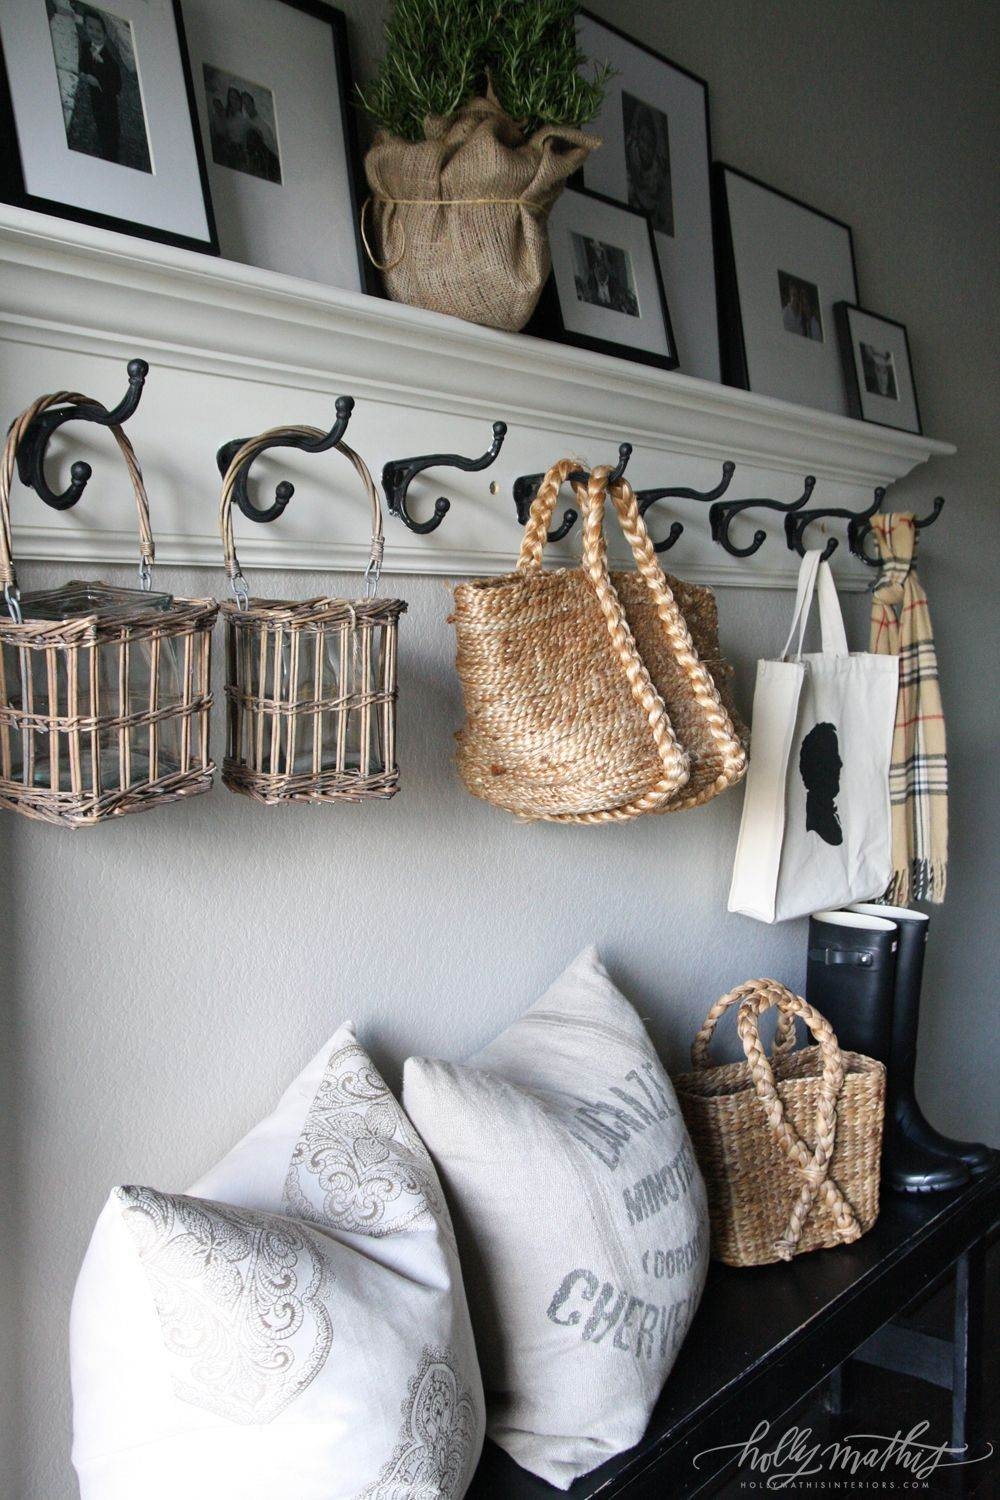 Wall shelf with baskets